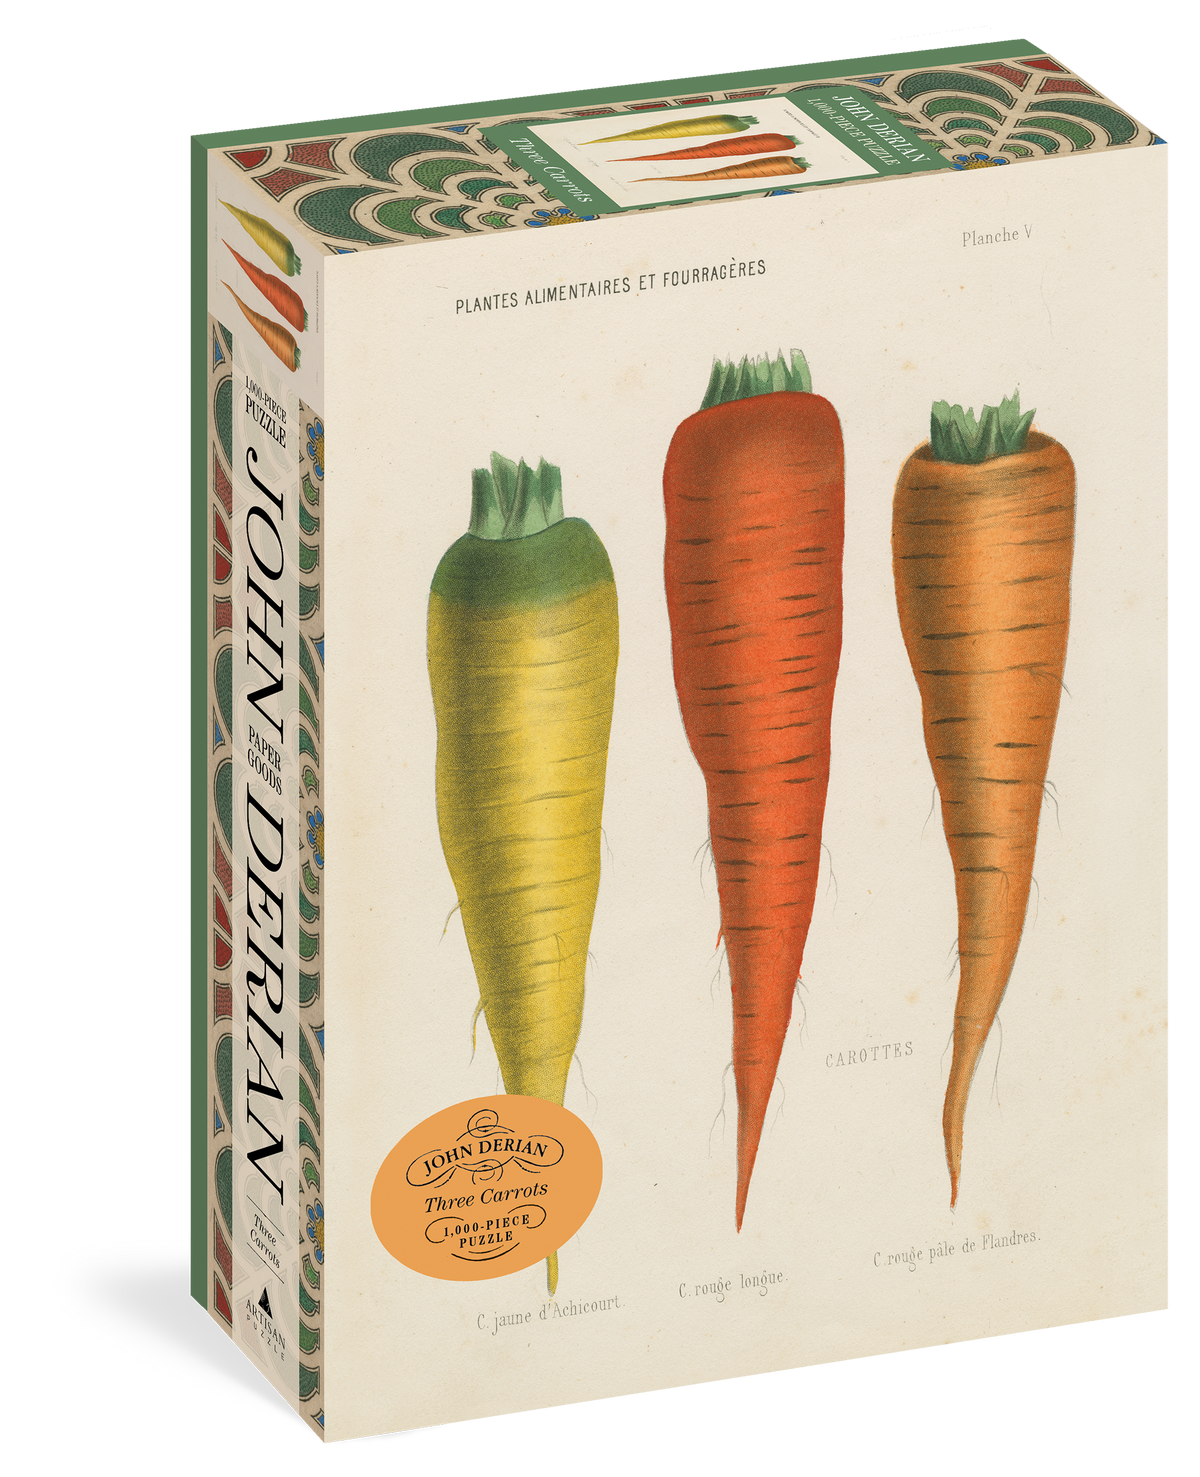 John Derian Paper Goods: Three Carrots Puzzle